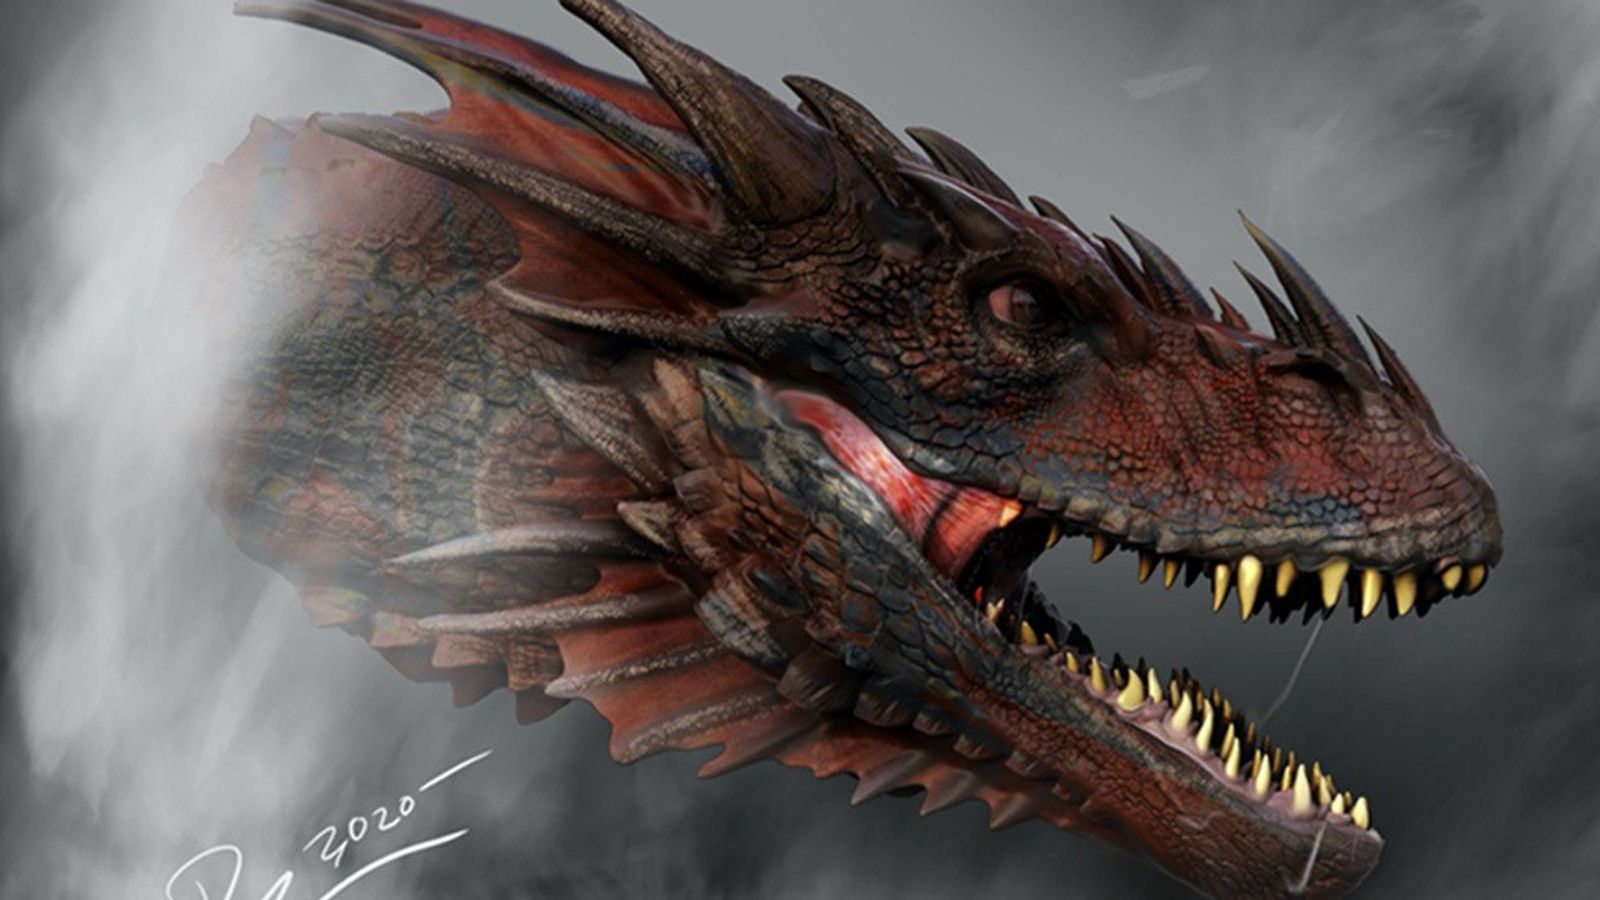 House of the Dragon: elenco do spin-off de Game of Thrones ganha